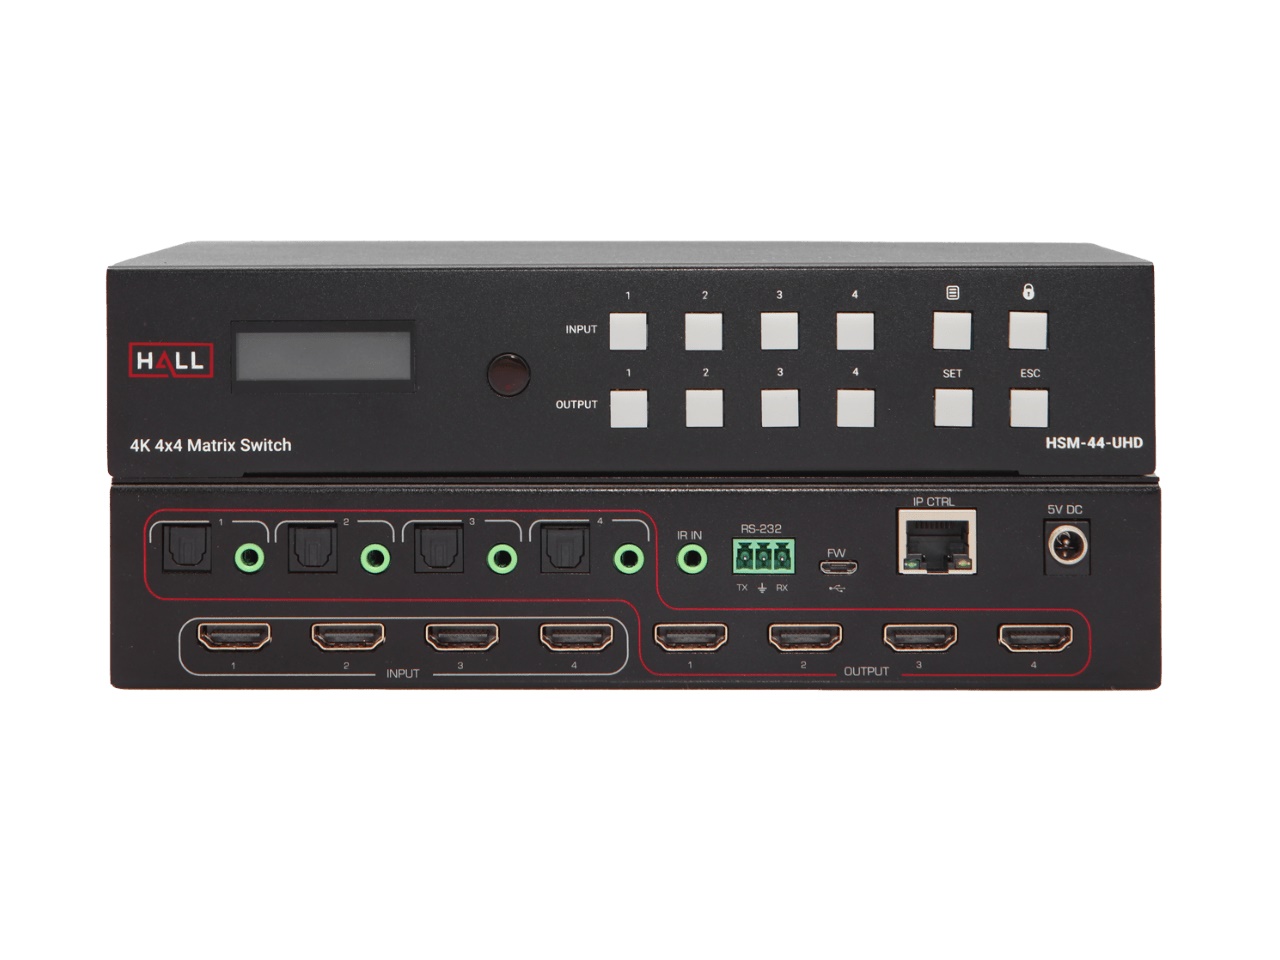 HSM-44-UHD 4x4 Matrix Video Switcher by Hall Research